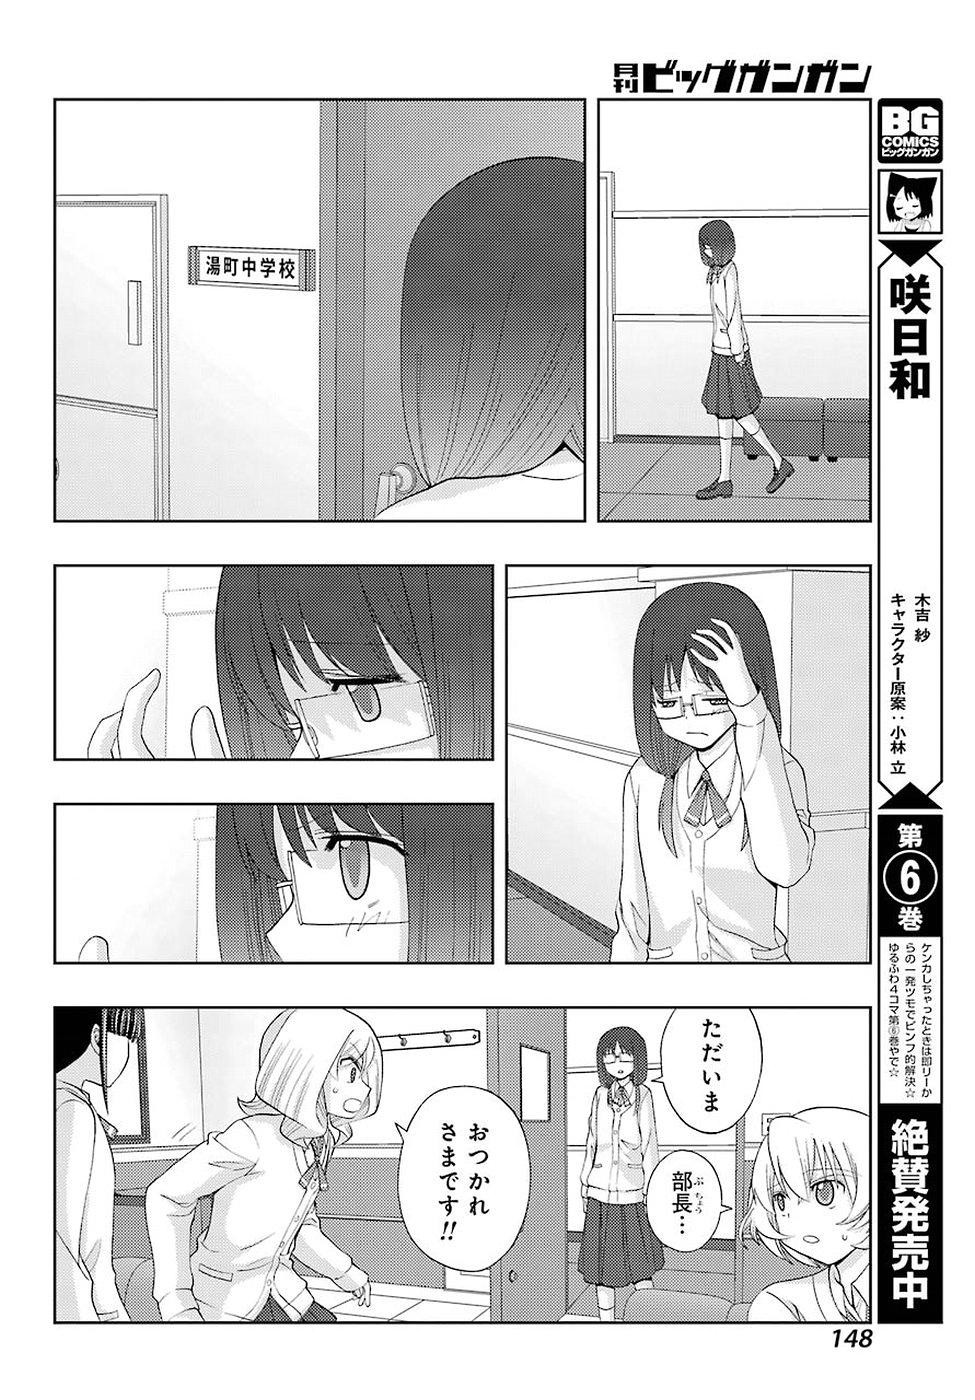 Shinohayu - The Dawn of Age Manga - Chapter 053 - Page 4